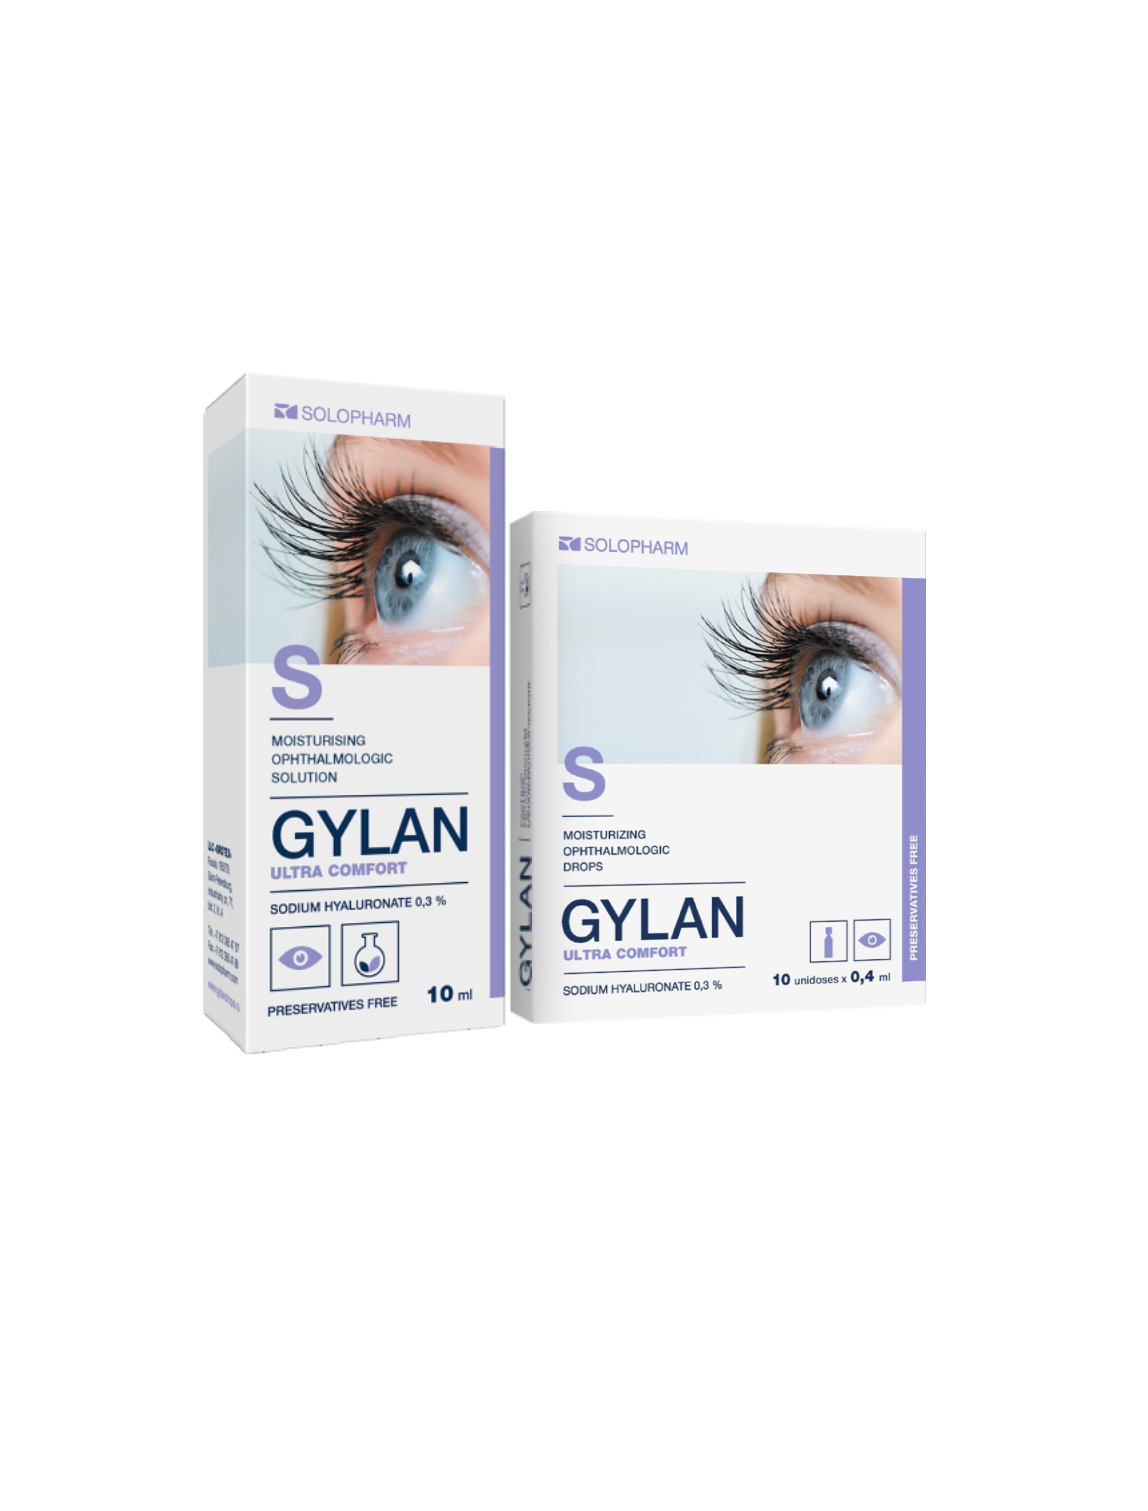 Gylan Ultra Comfort Lubricant Eye Drops: Product Instructions | Gylan